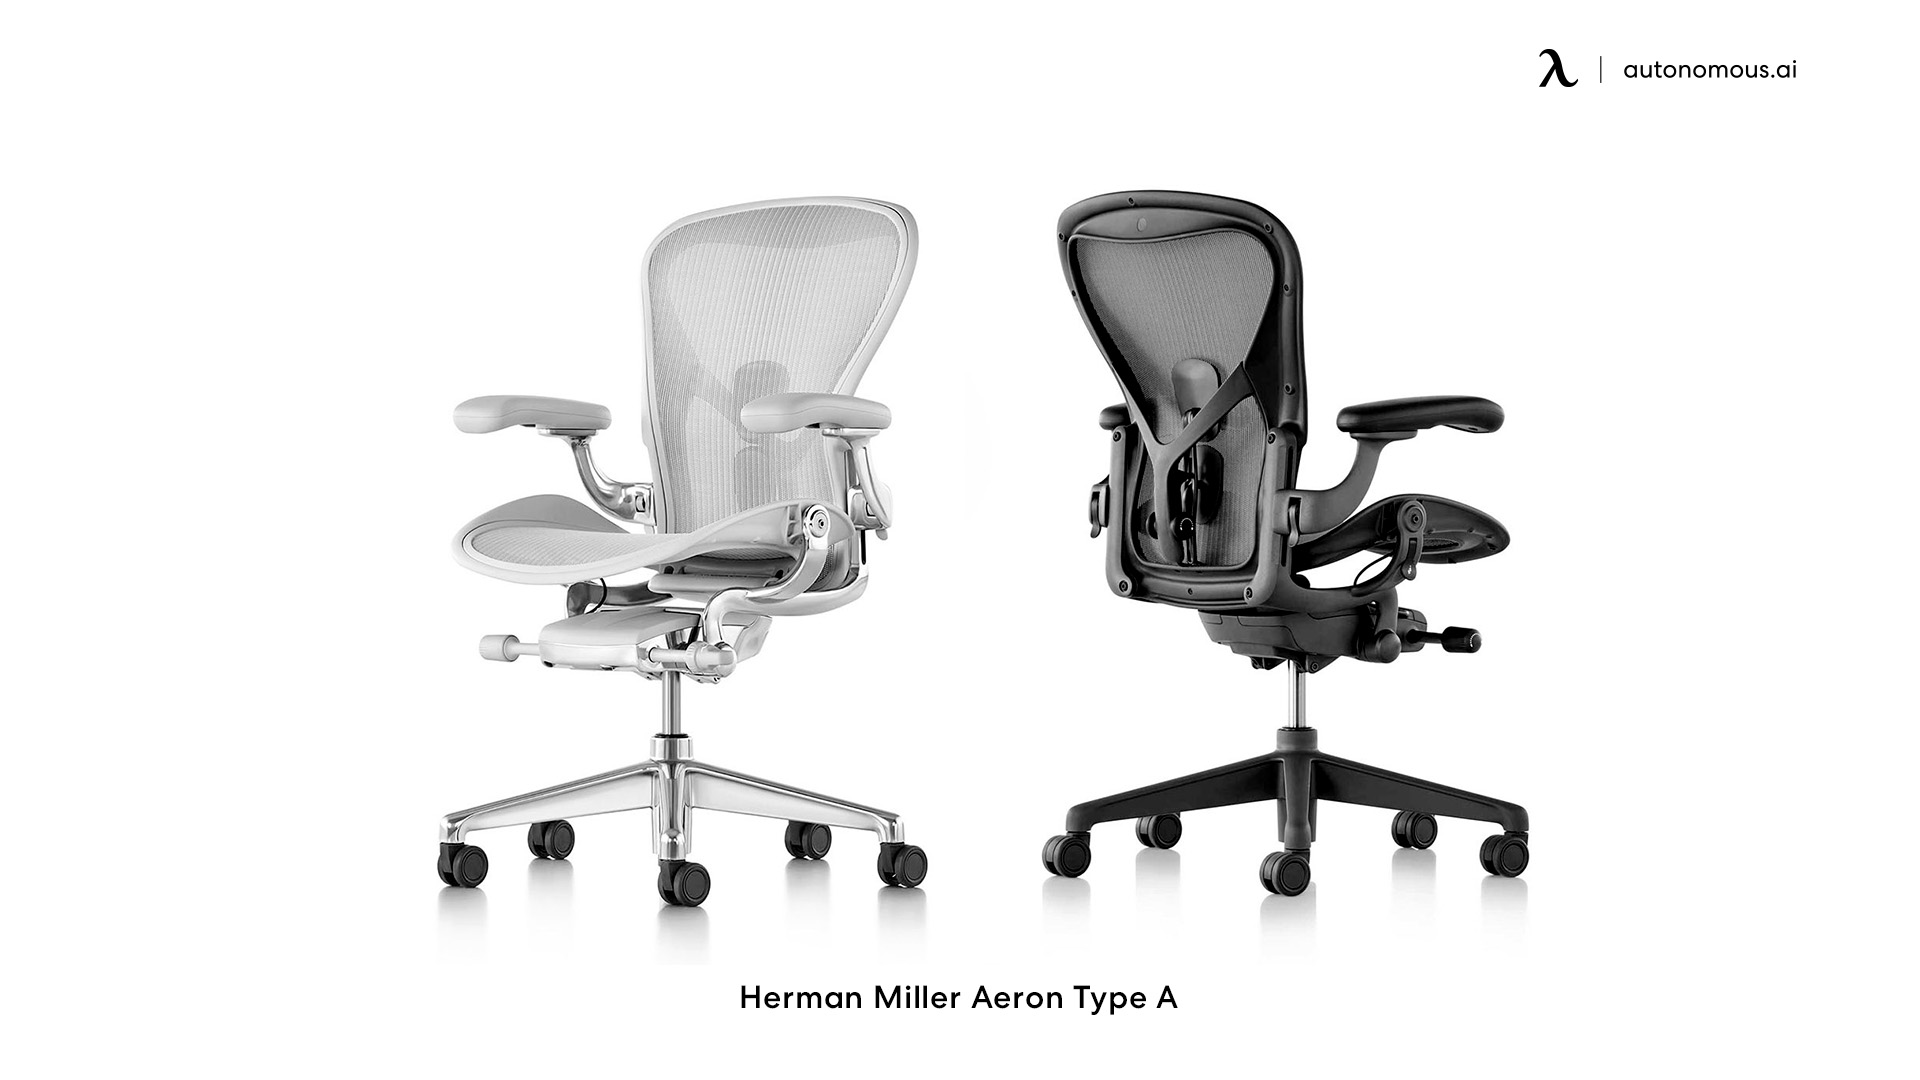 Herman Miller Aeron orthopedic office chair for back pain